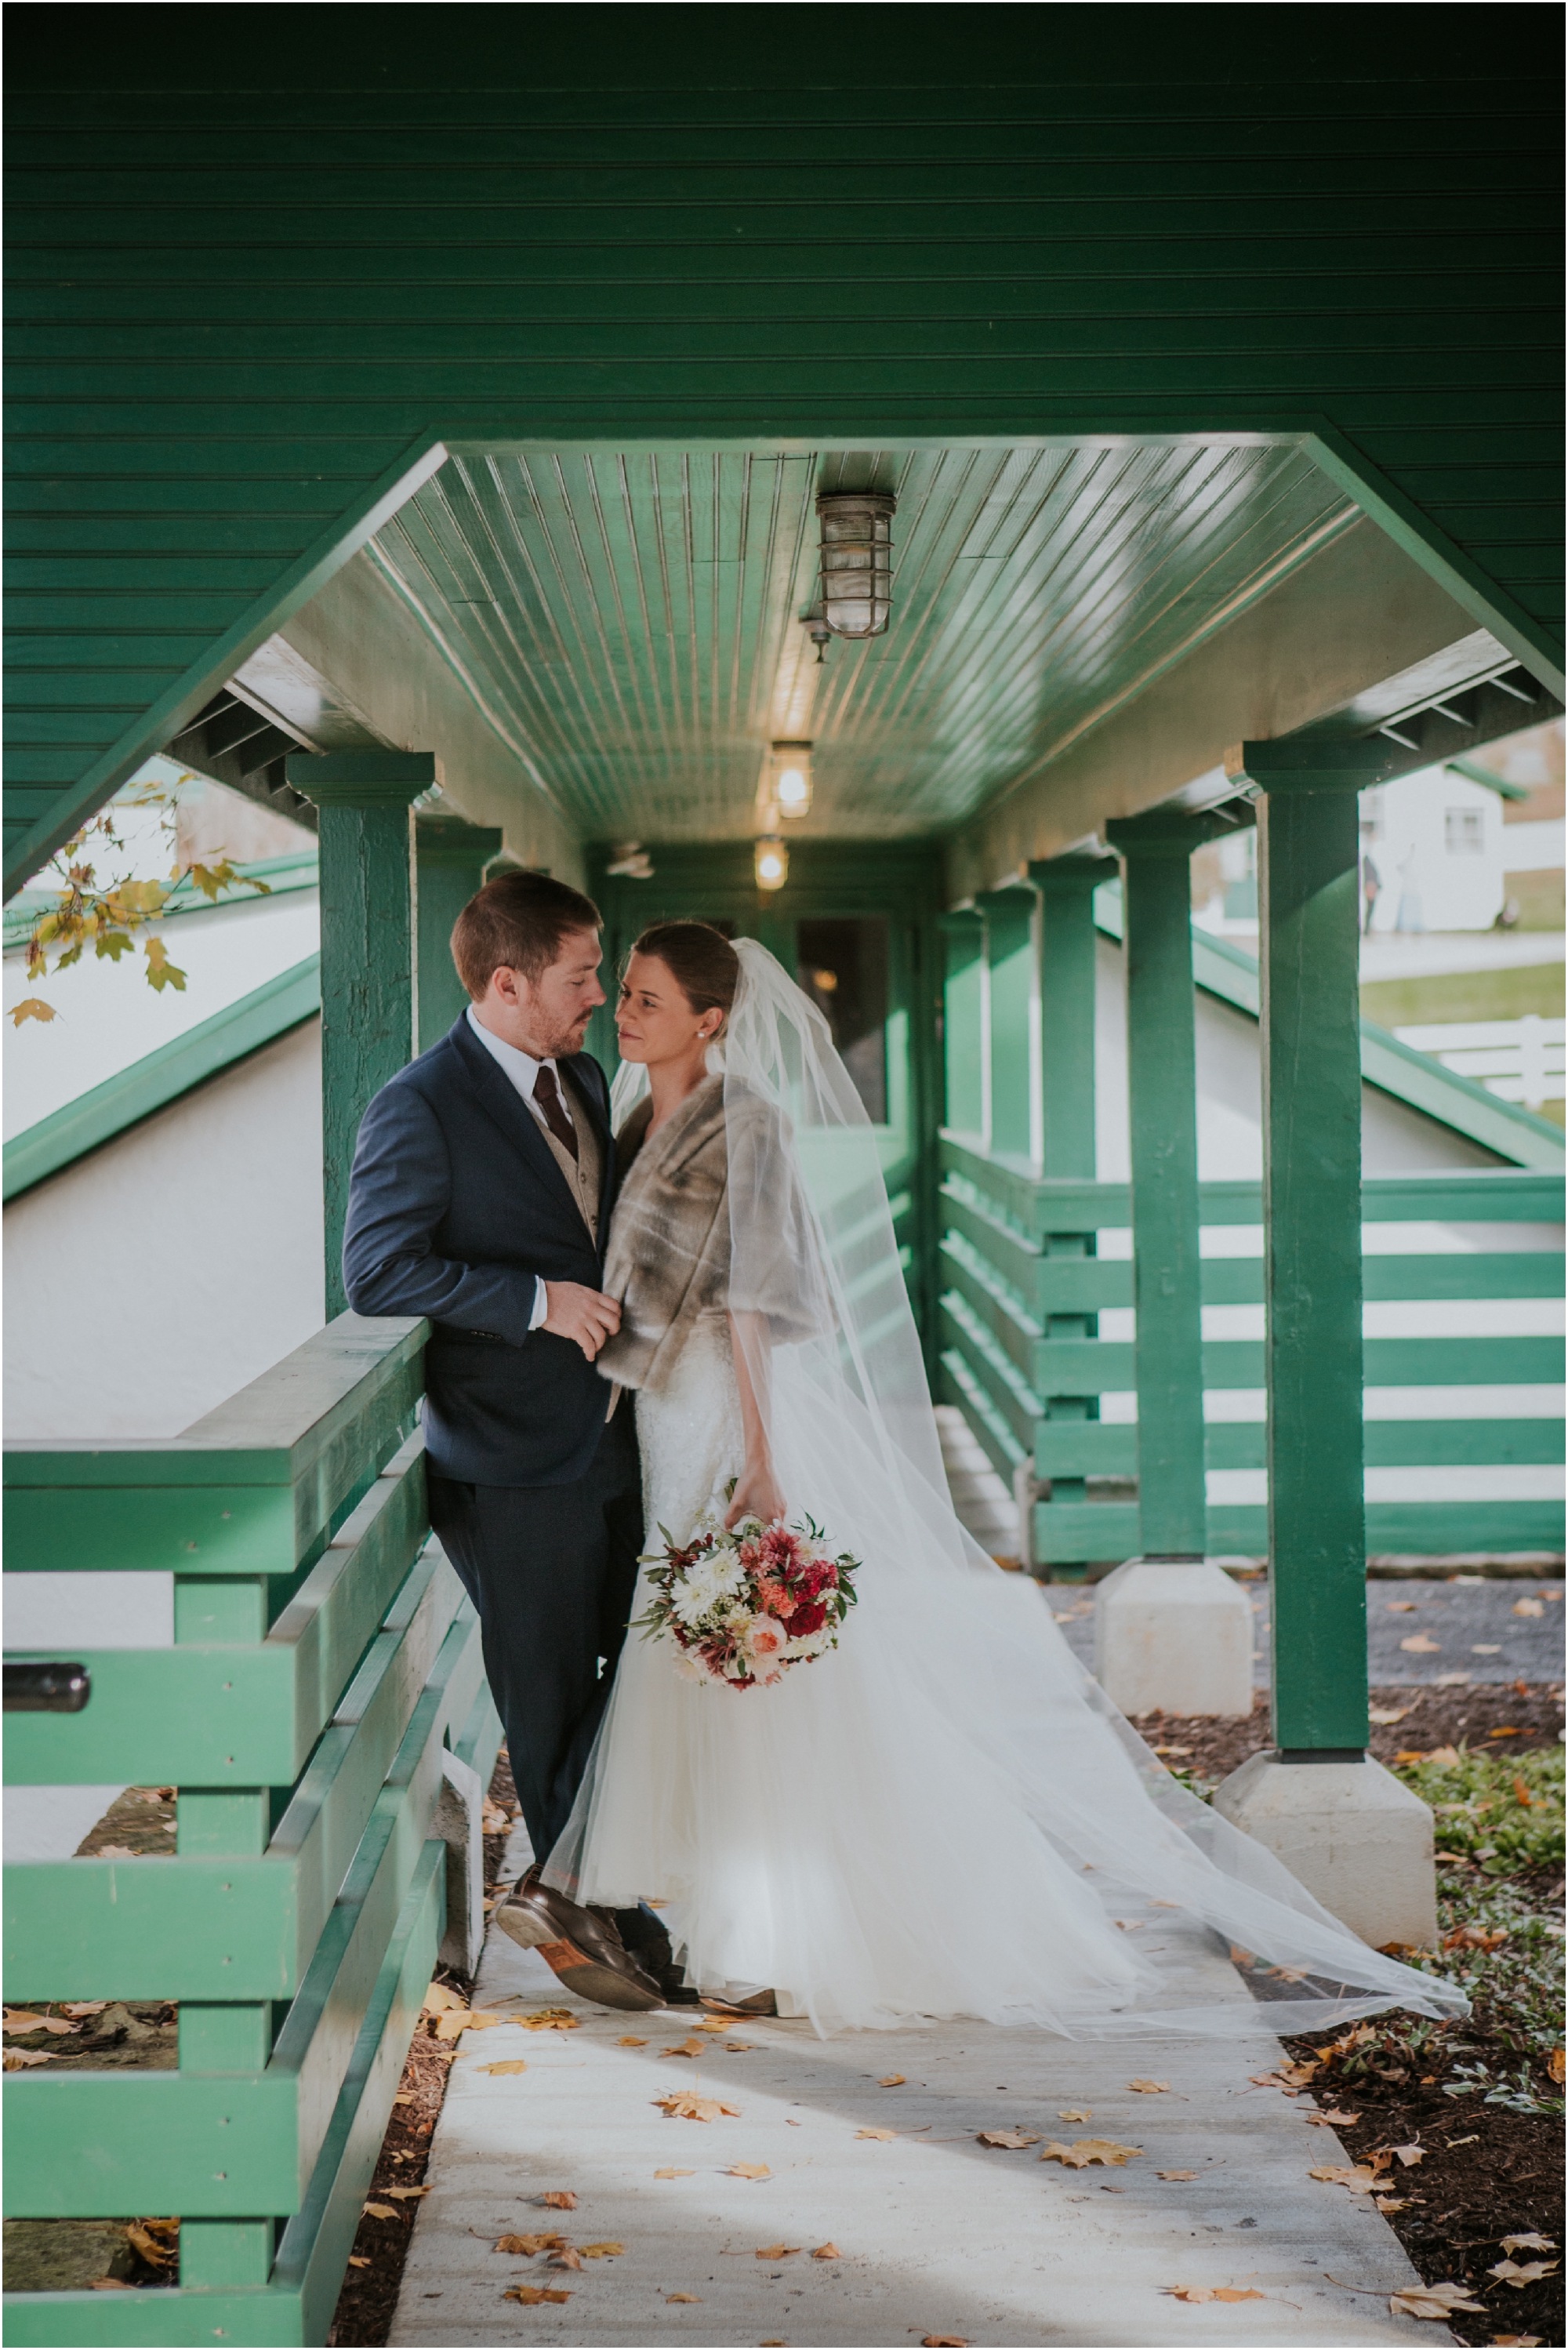 warm-springs-old-dairy-virginia-rustic-wedding-northeast-tennessee-elopement-adventuruous-photographer-katy-sergent_0034.jpg